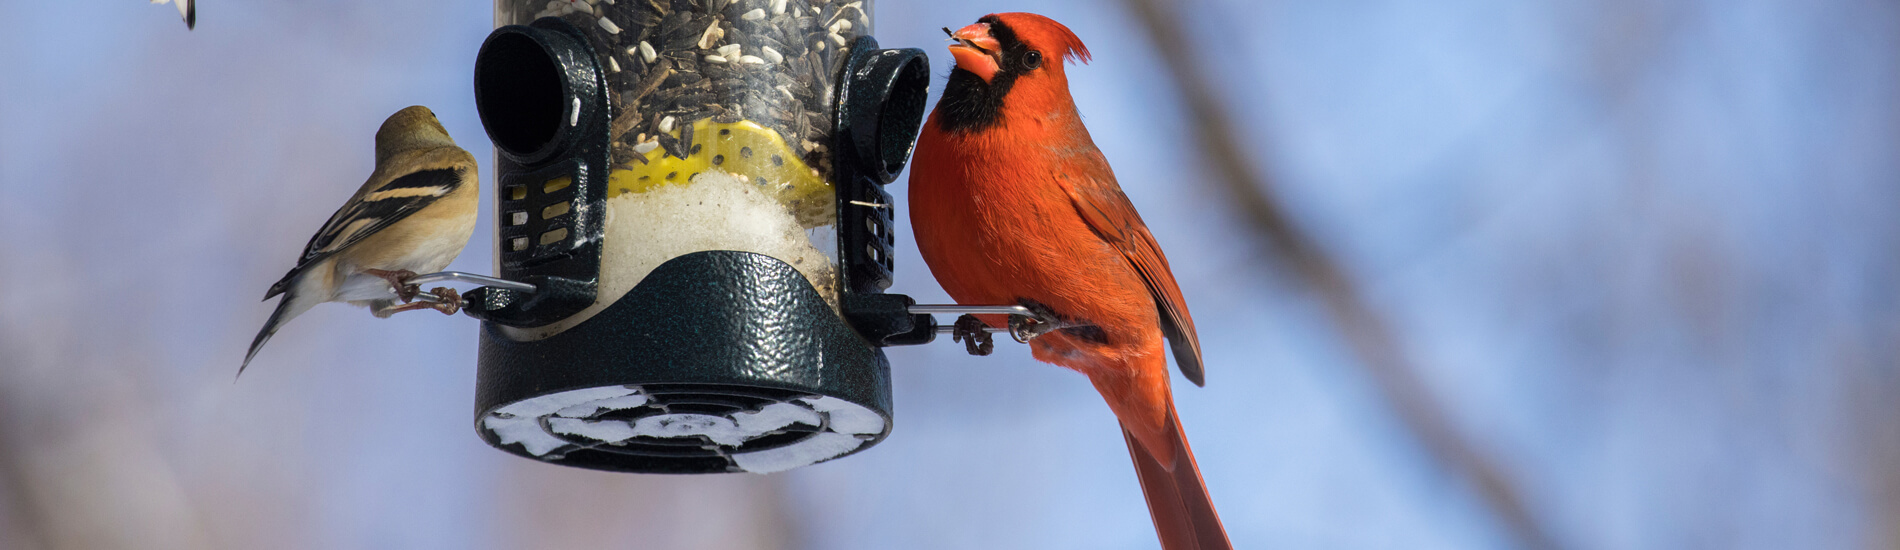 Backyard Birds At Feeder In Winter, Northern Cardinal , American